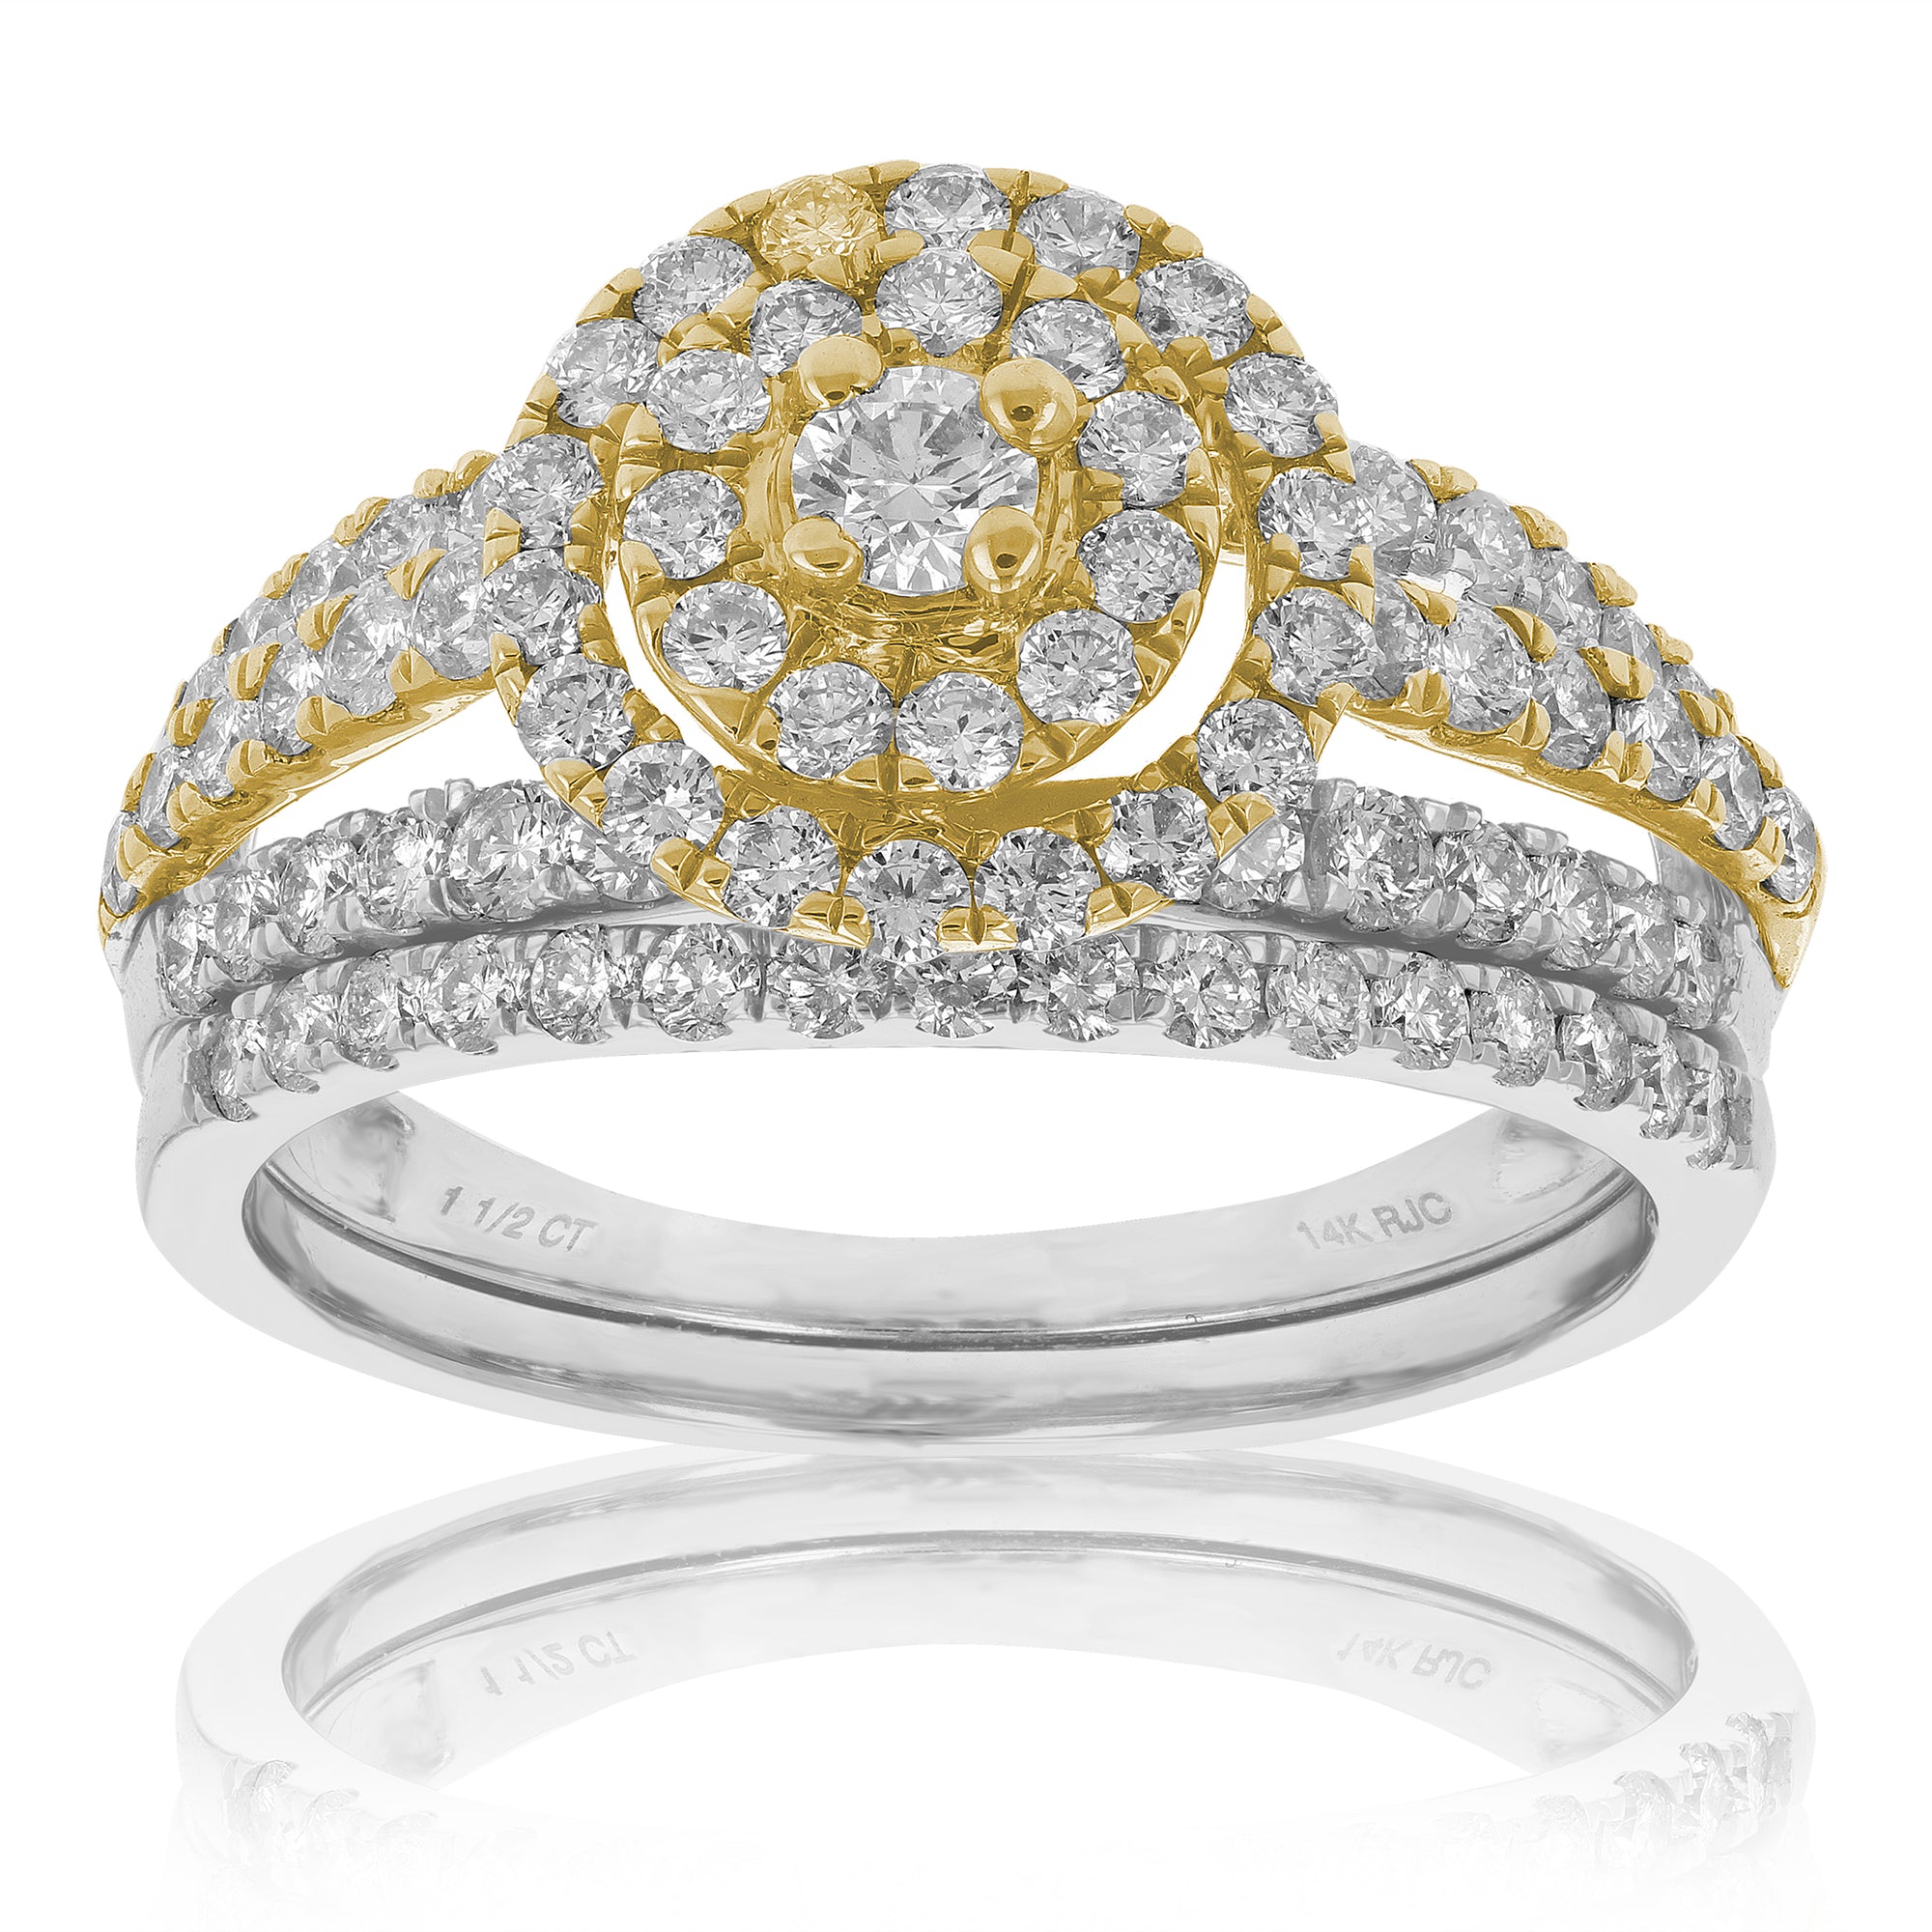 1.25 cttw Diamond Wedding Engagement Ring Set 14K White Yellow Gold Halo